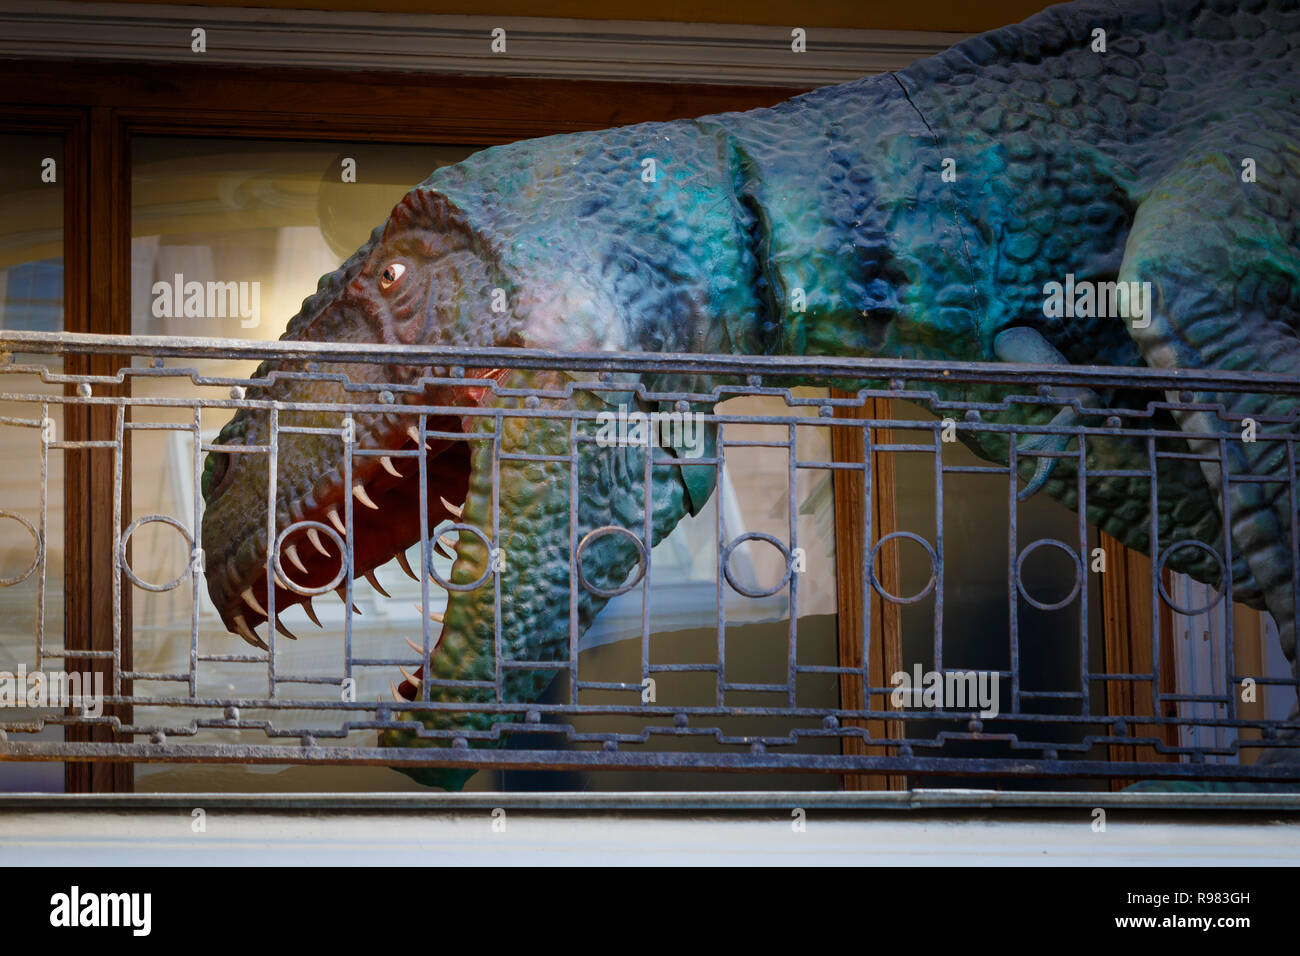 Movie Tyranosaurus Rex model dinosaur on display along a department store balcony. St Petersburg, Russia. Stock Photo